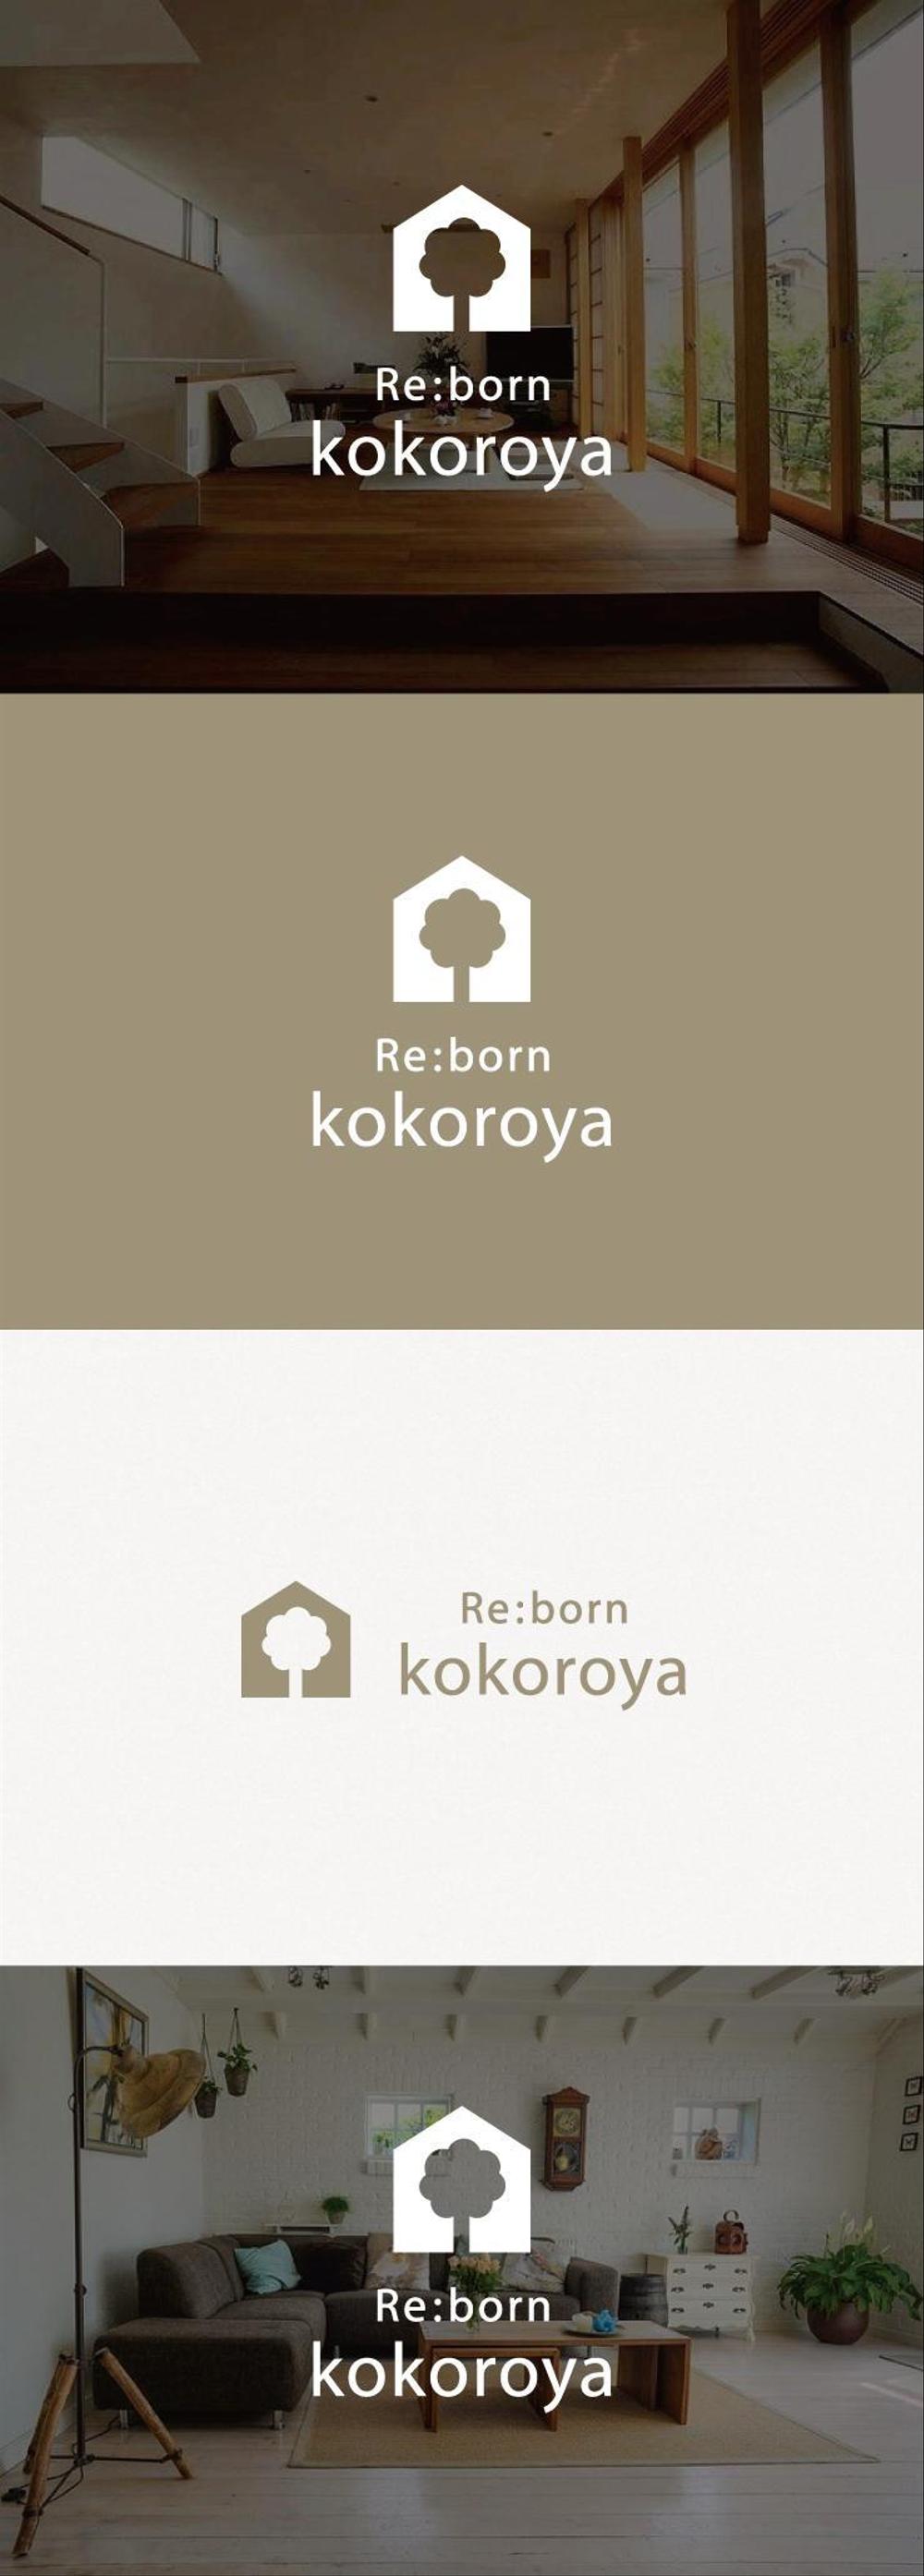 Re :born kokoroya 心家